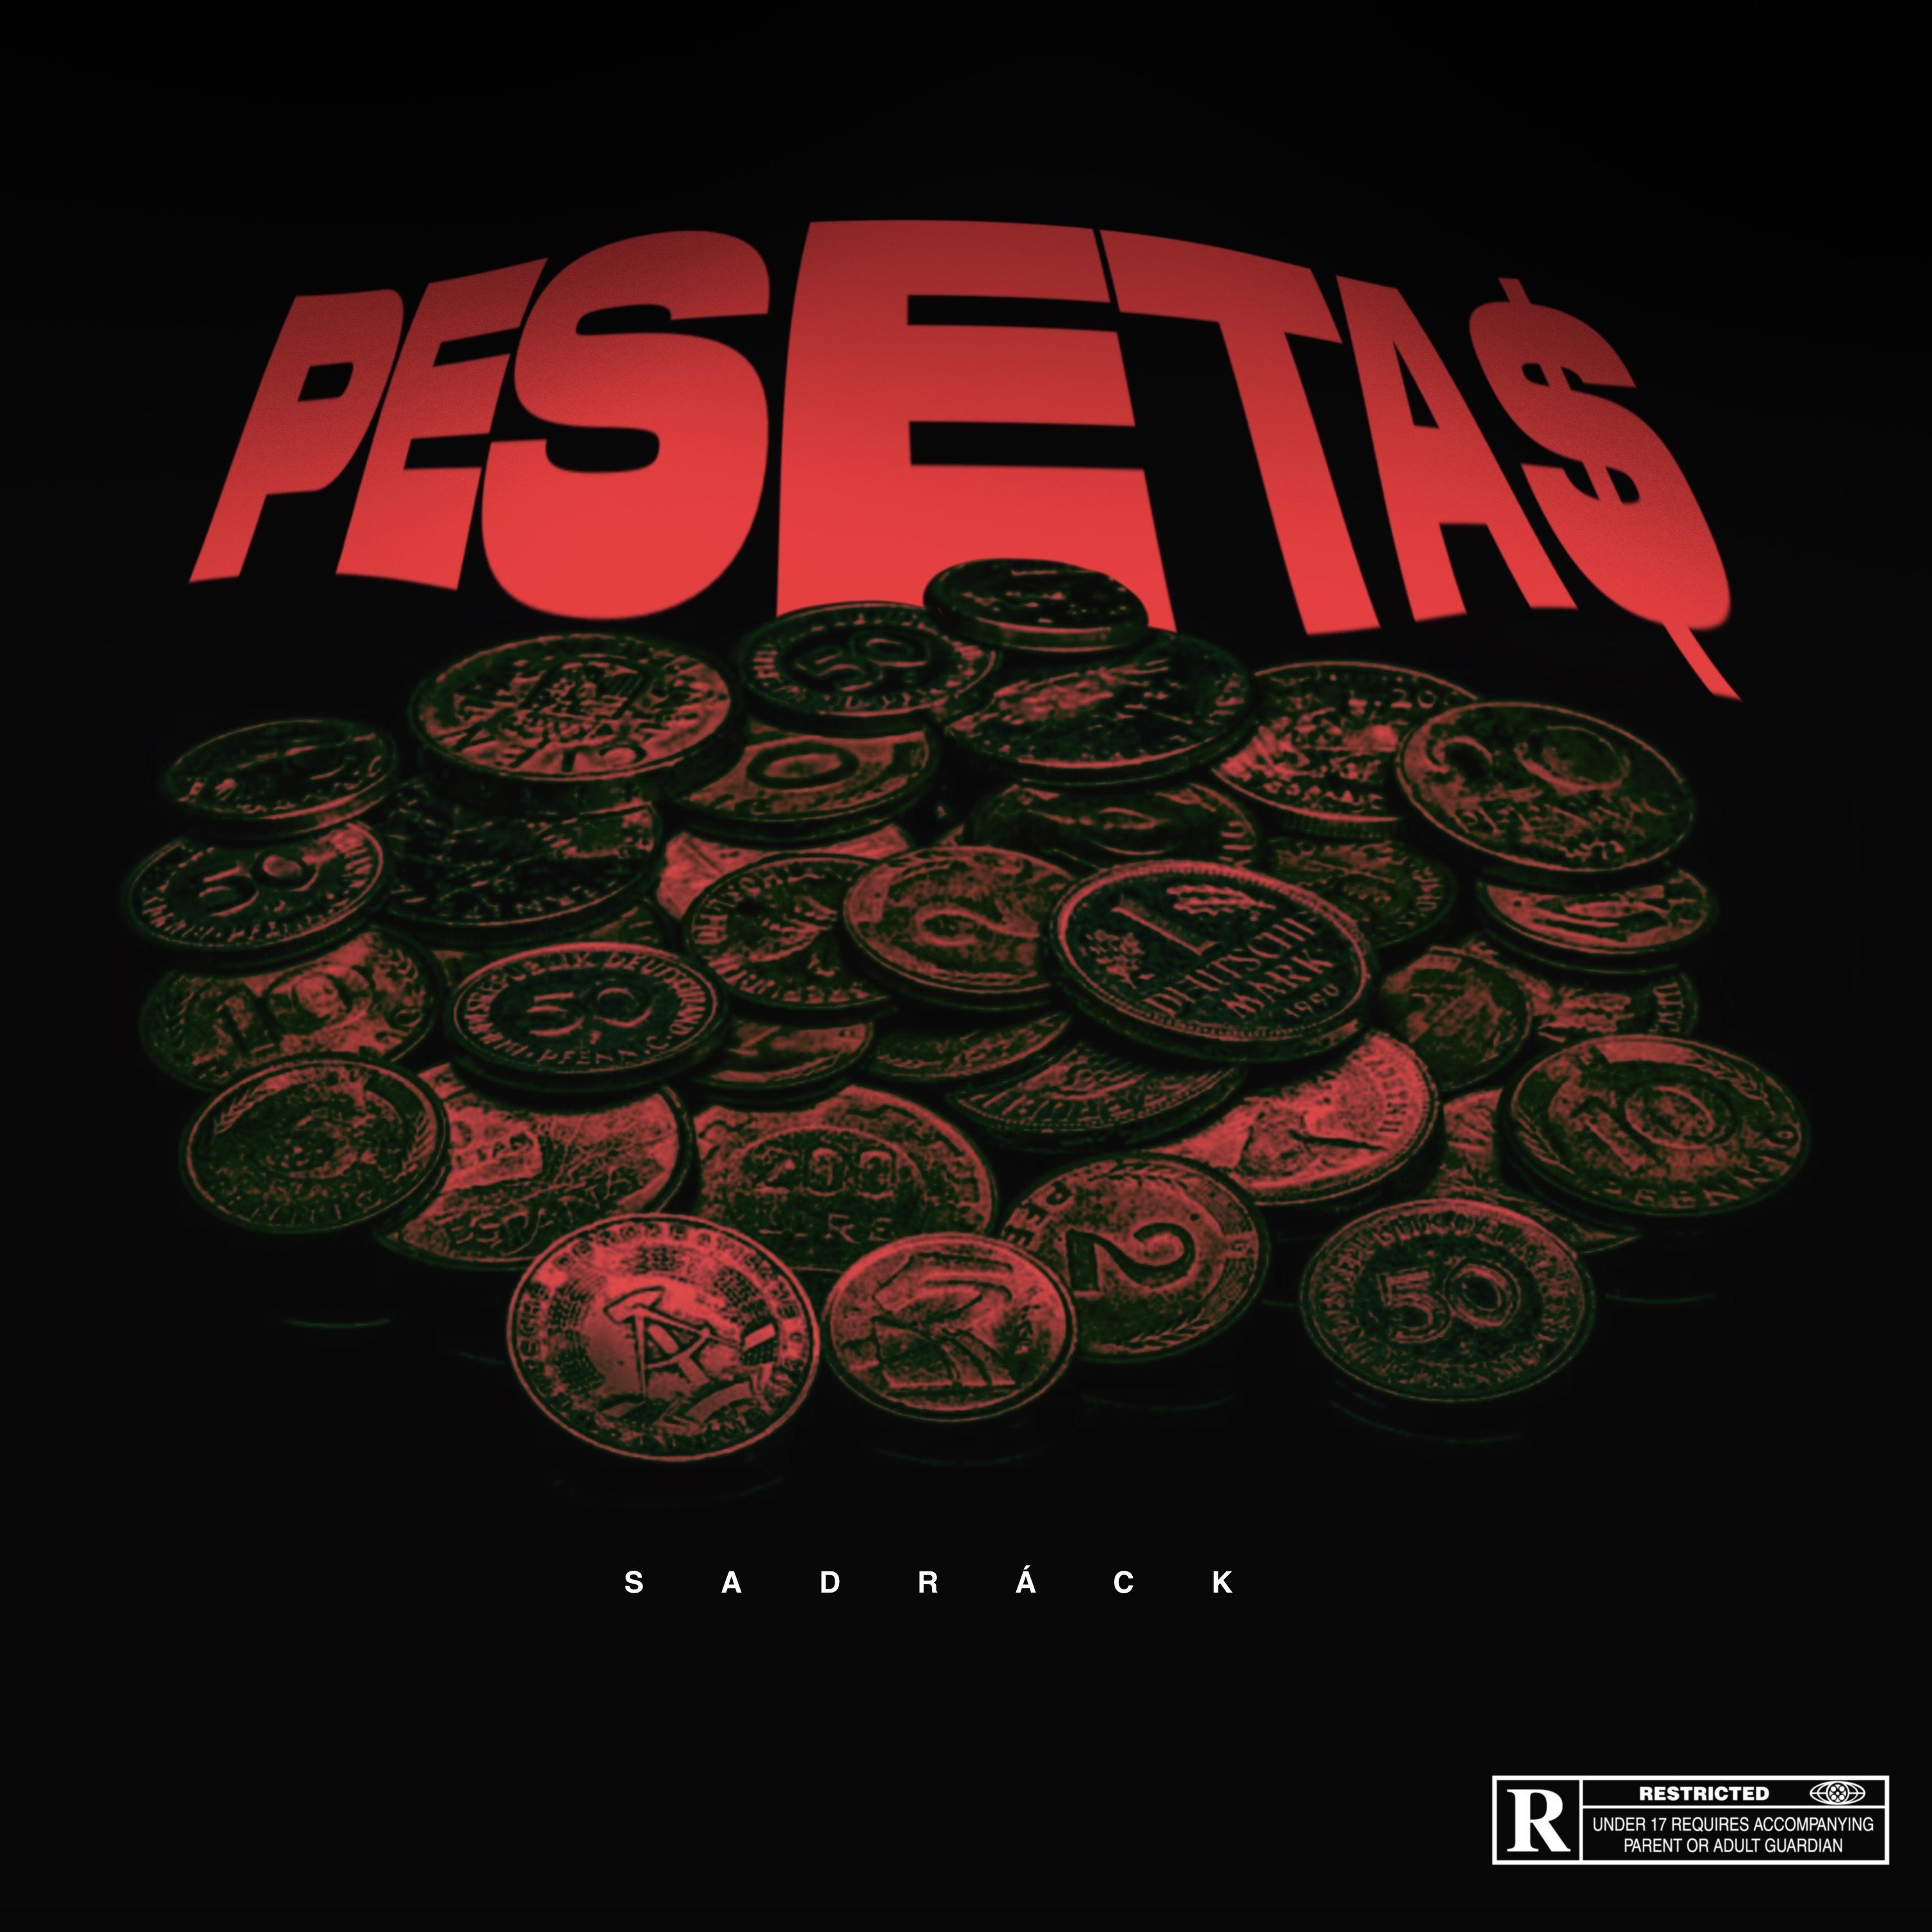 Постер альбома Pesetas